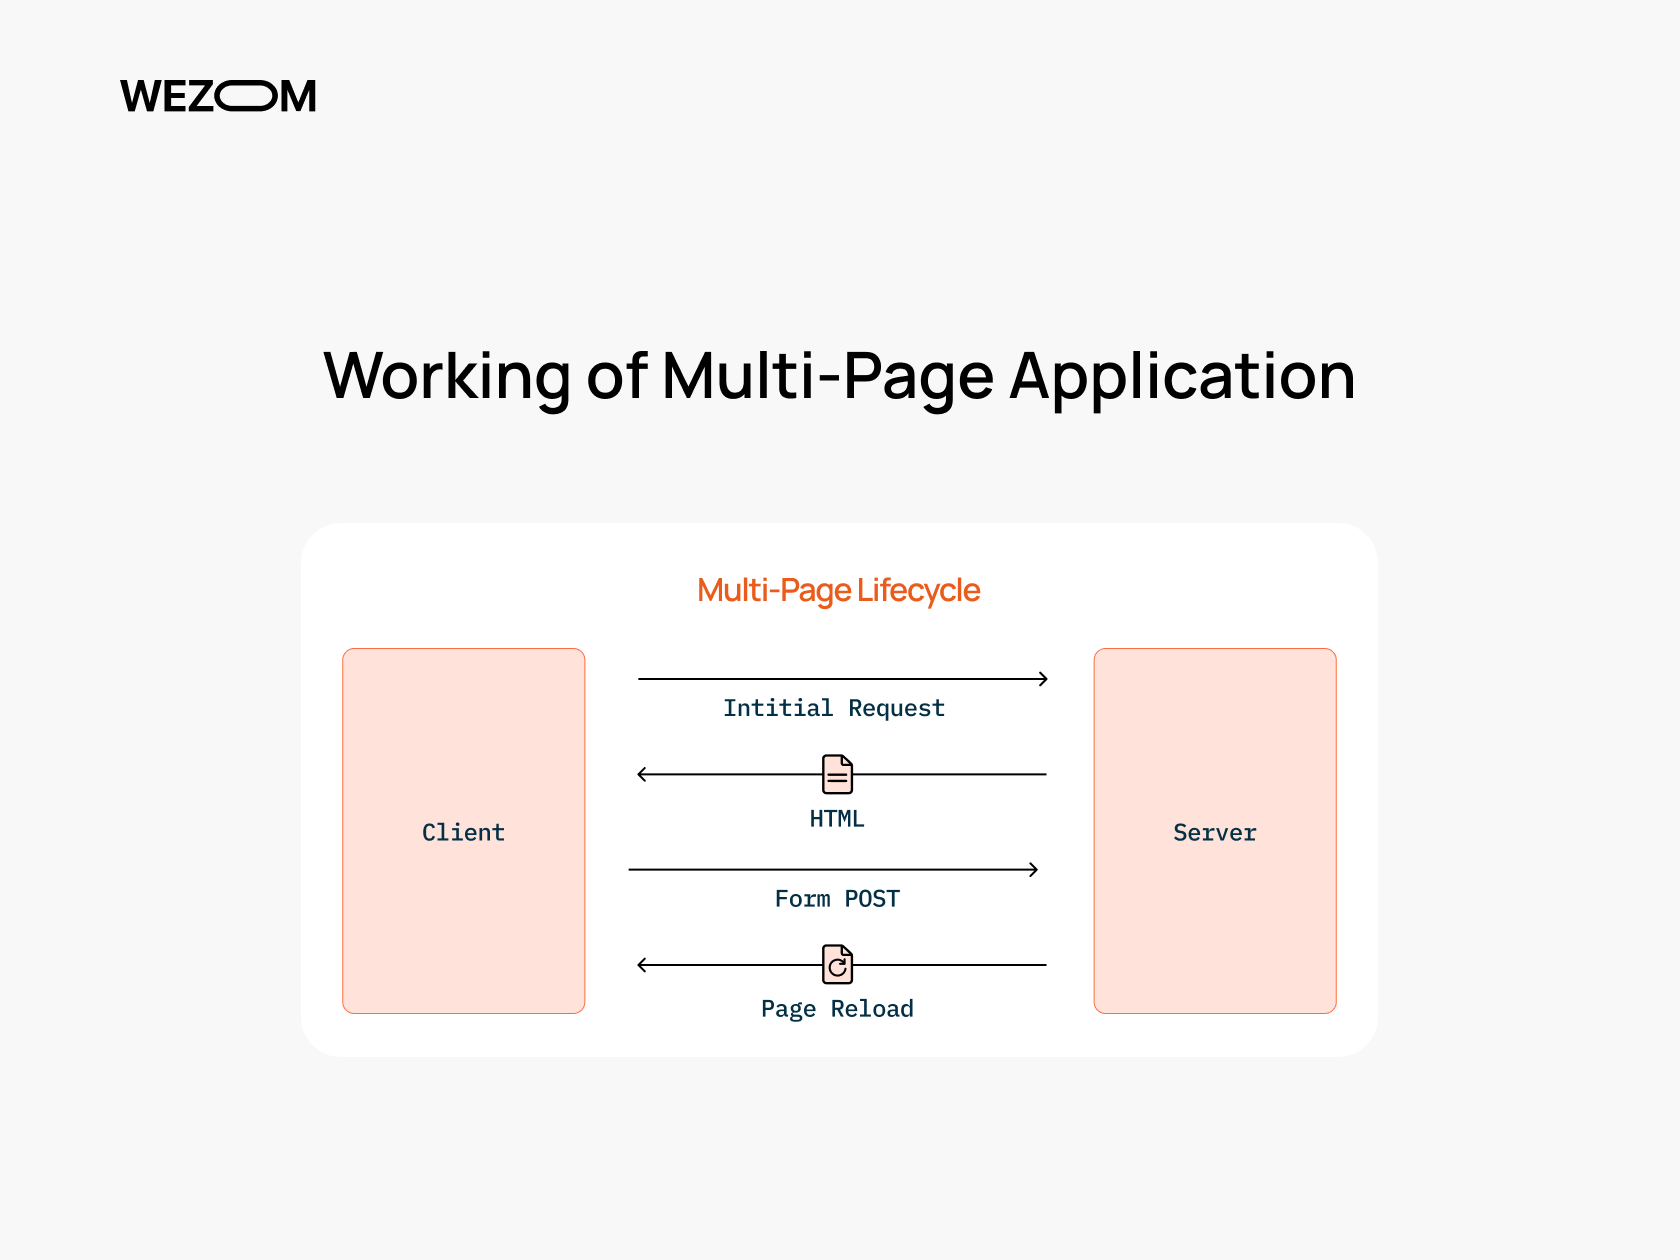 Multi-Page Application process